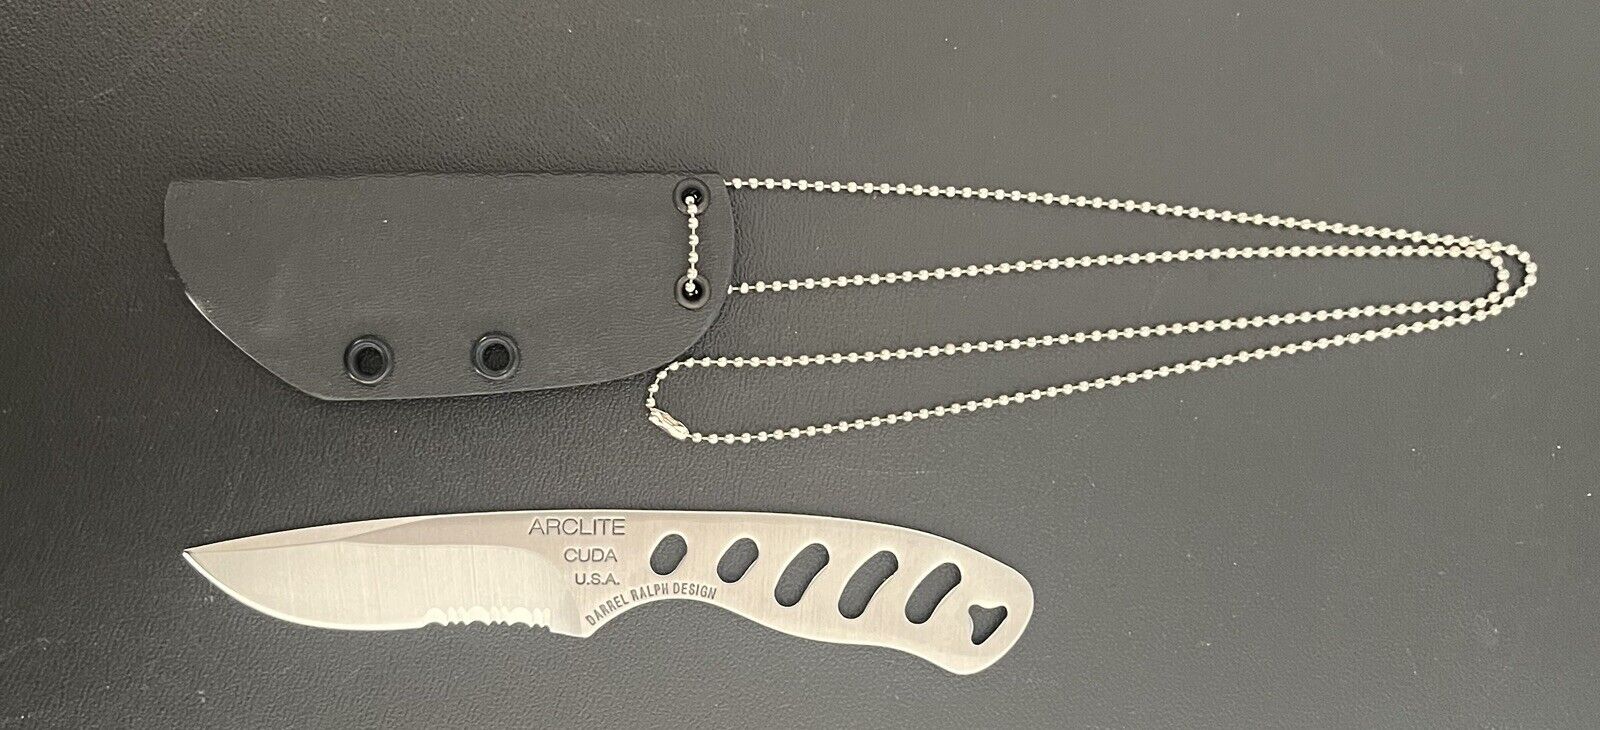 RARE CAMILLUS USA CUDA ARCLITE DARREL RALPH CUSTOM￼ TACTICAL KNIFE W/ SHEATH